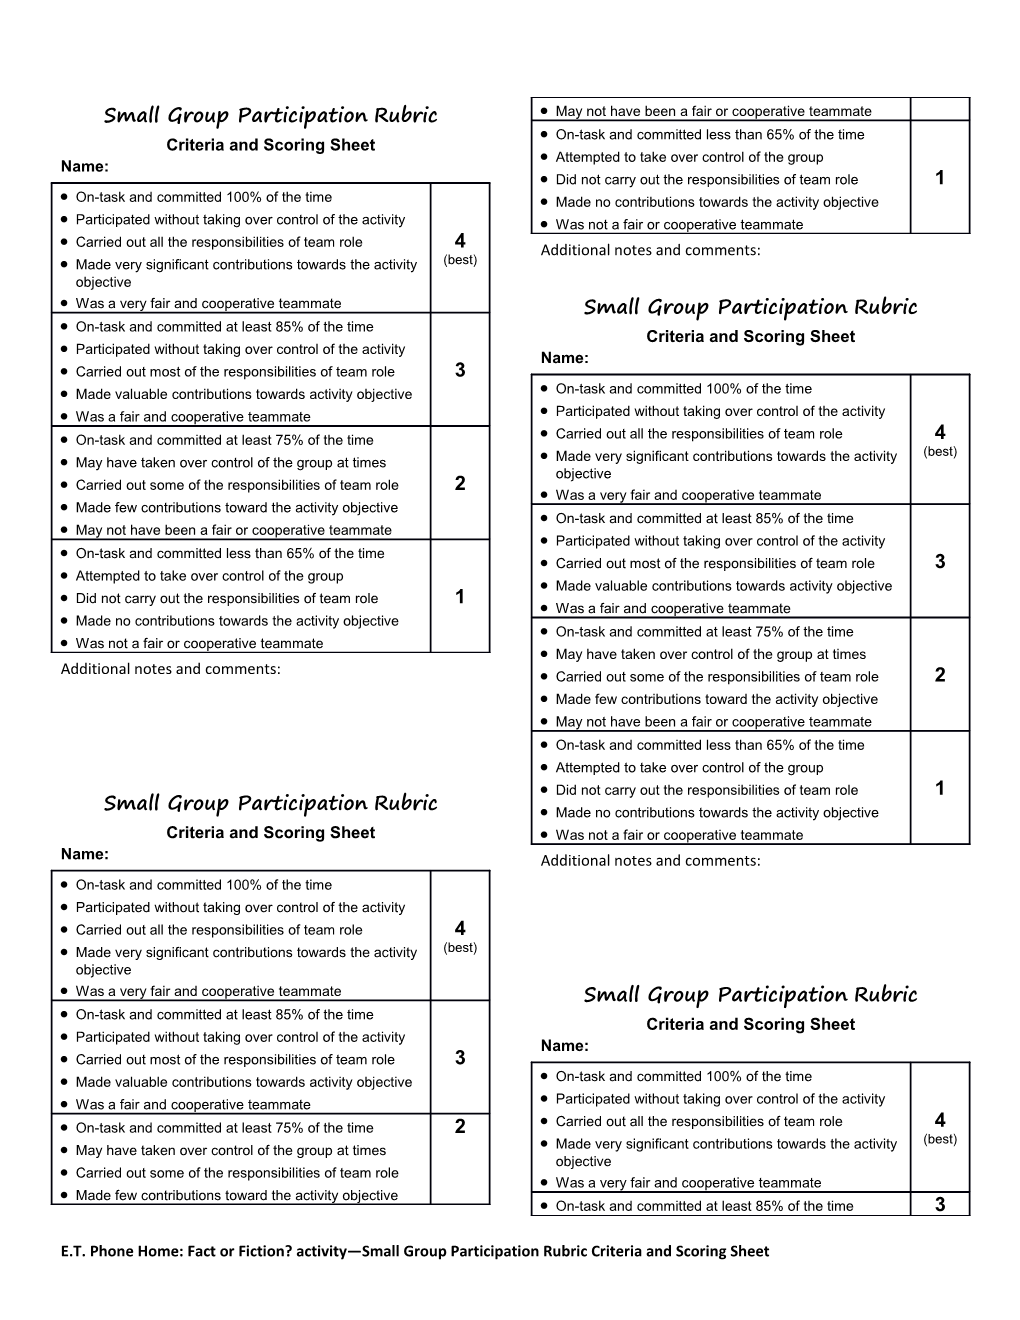 Small Group Participationrubric Criteria and Scoring Sheet